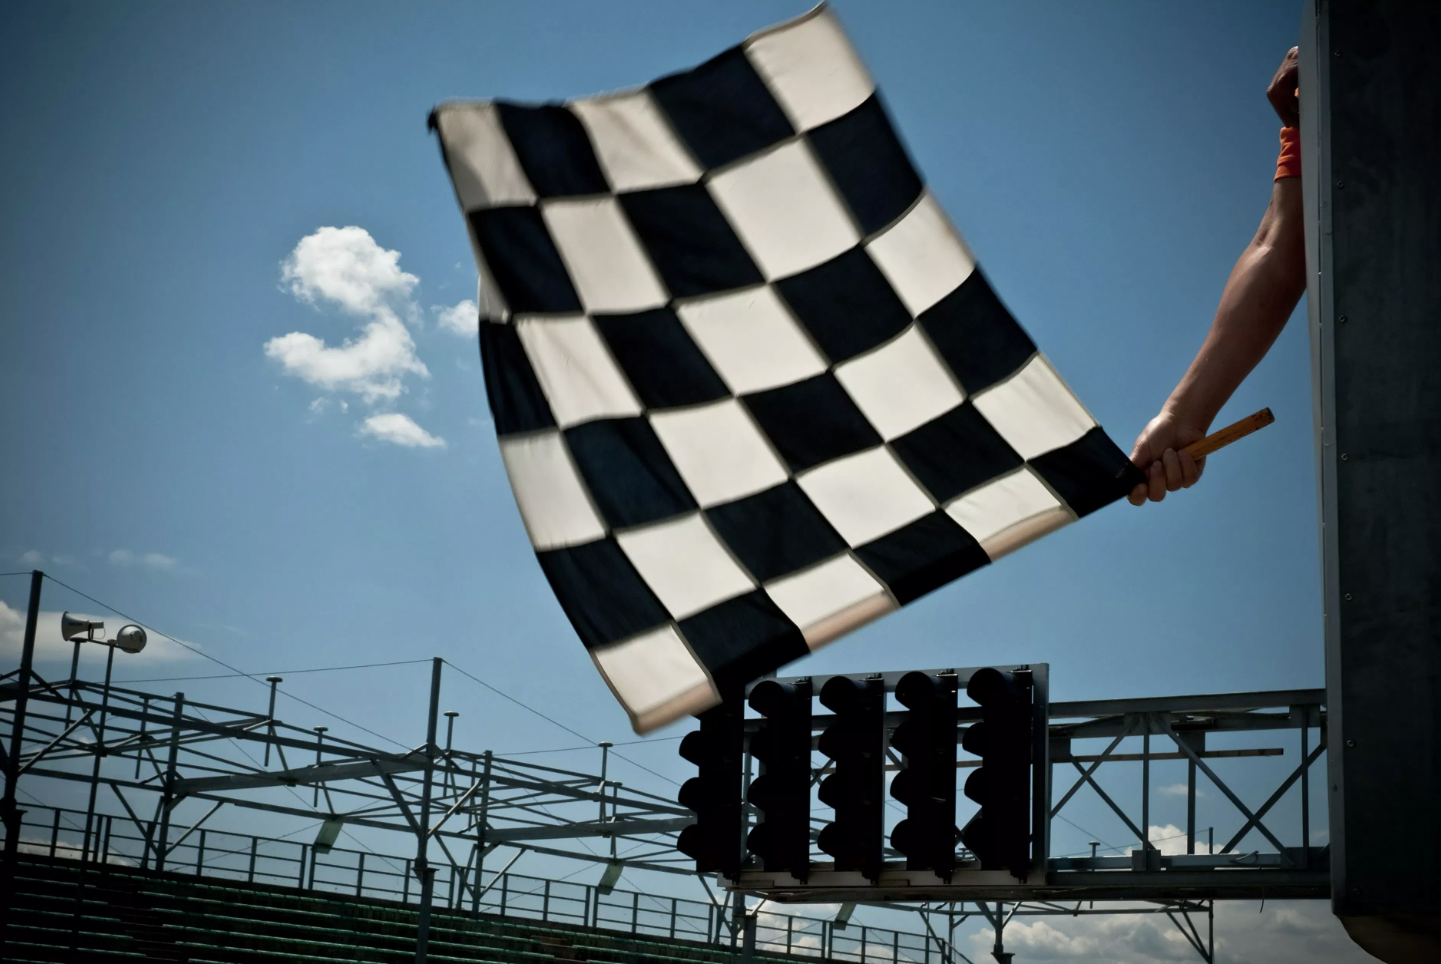 Waving the checkered flag at a car race